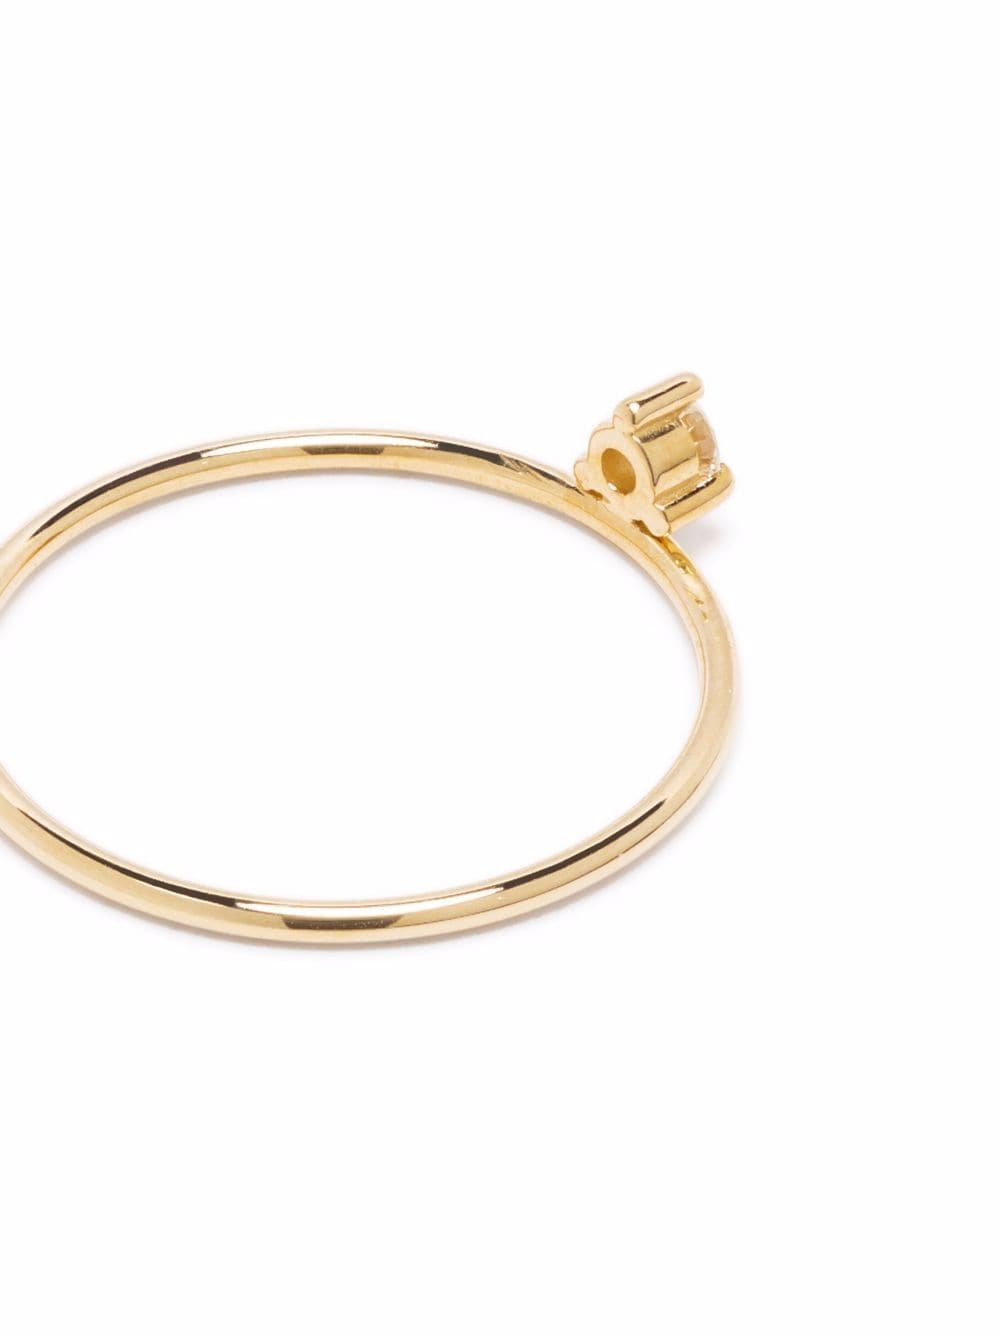 Shop Mizuki 14kt Yellow Gold Diamond Solitaire Ring